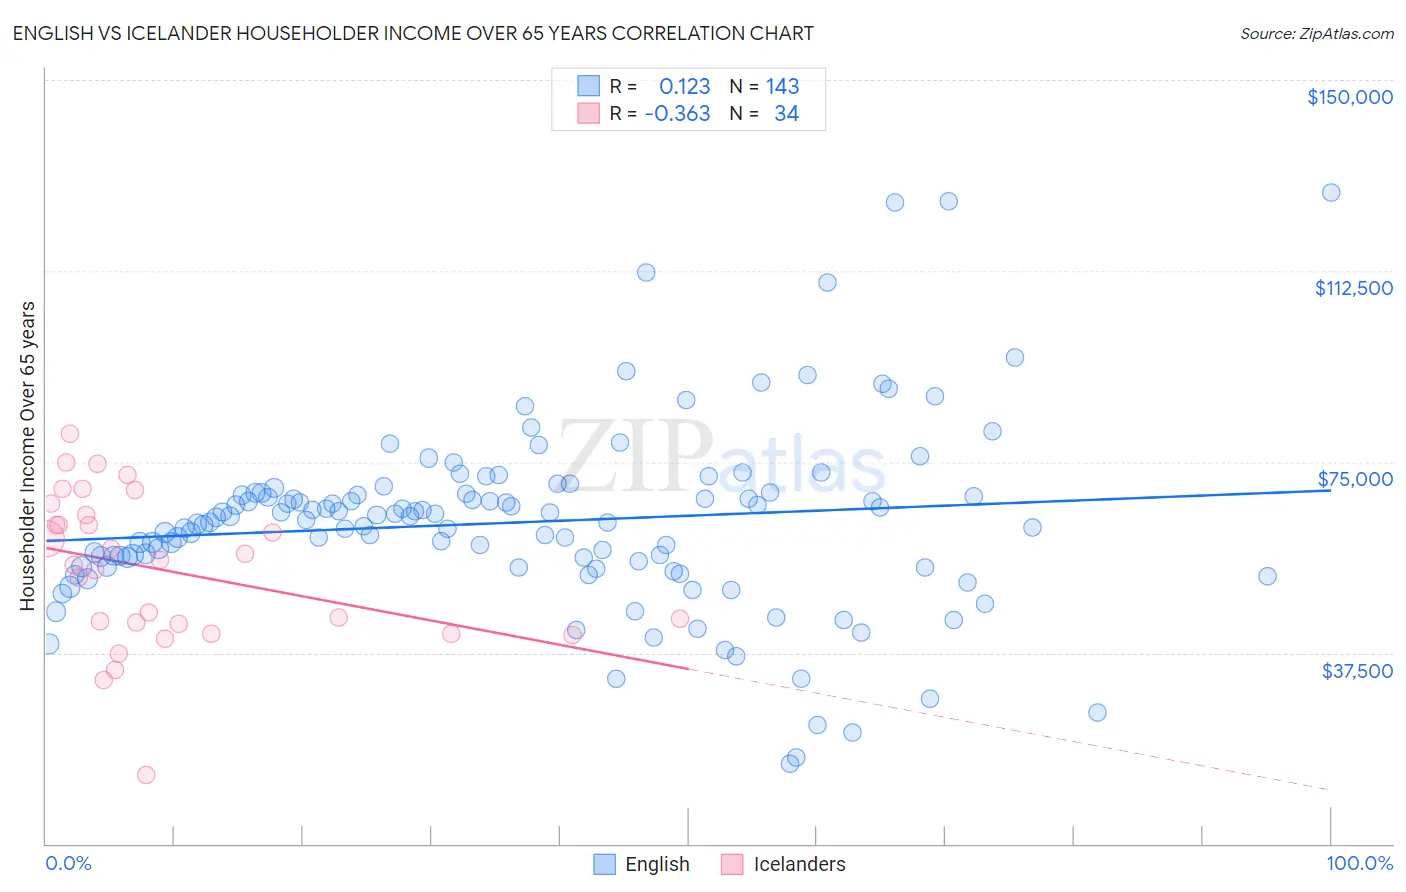 English vs Icelander Householder Income Over 65 years